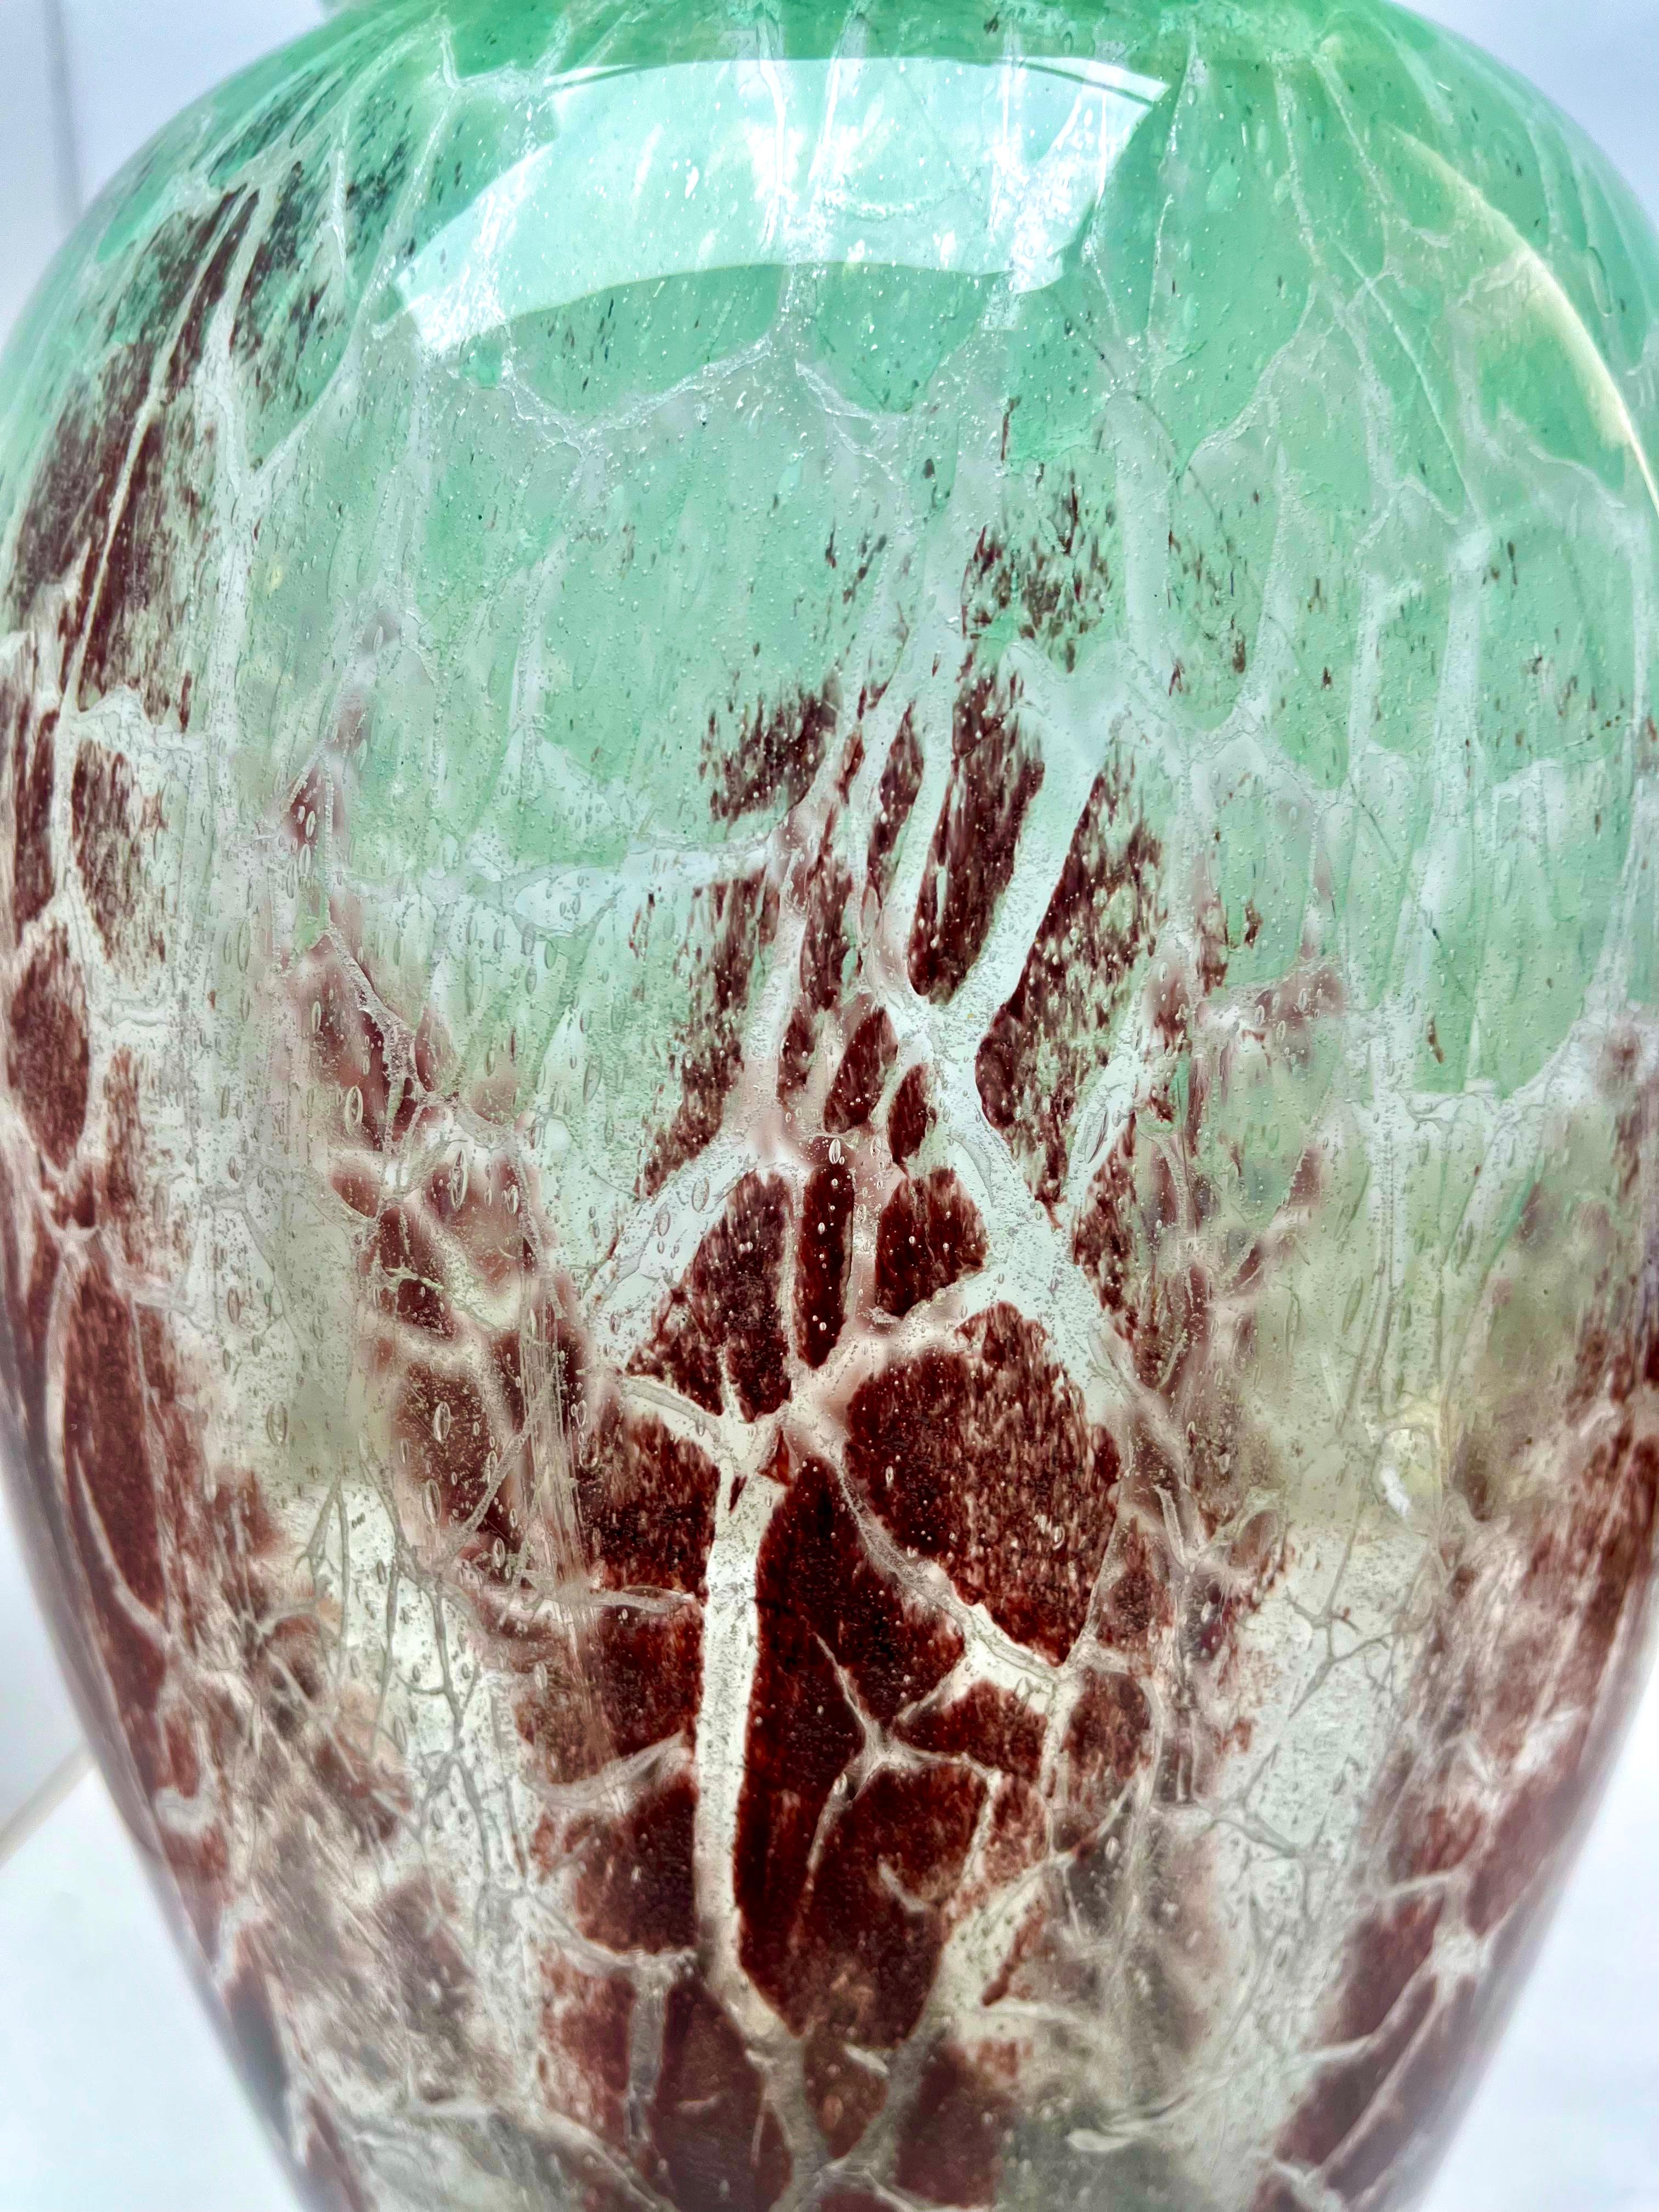 WMF 'Ikora' small crackled art glass vase
German glass bowl by Karl Wiedmann for WMF Ikora, 1930s Baushaus Art Deco.

A decorative 'Ikora' glass vase, produced, by WMF (Wurttembergische Metallwarenfabrik) in Germany.
With crackled details in